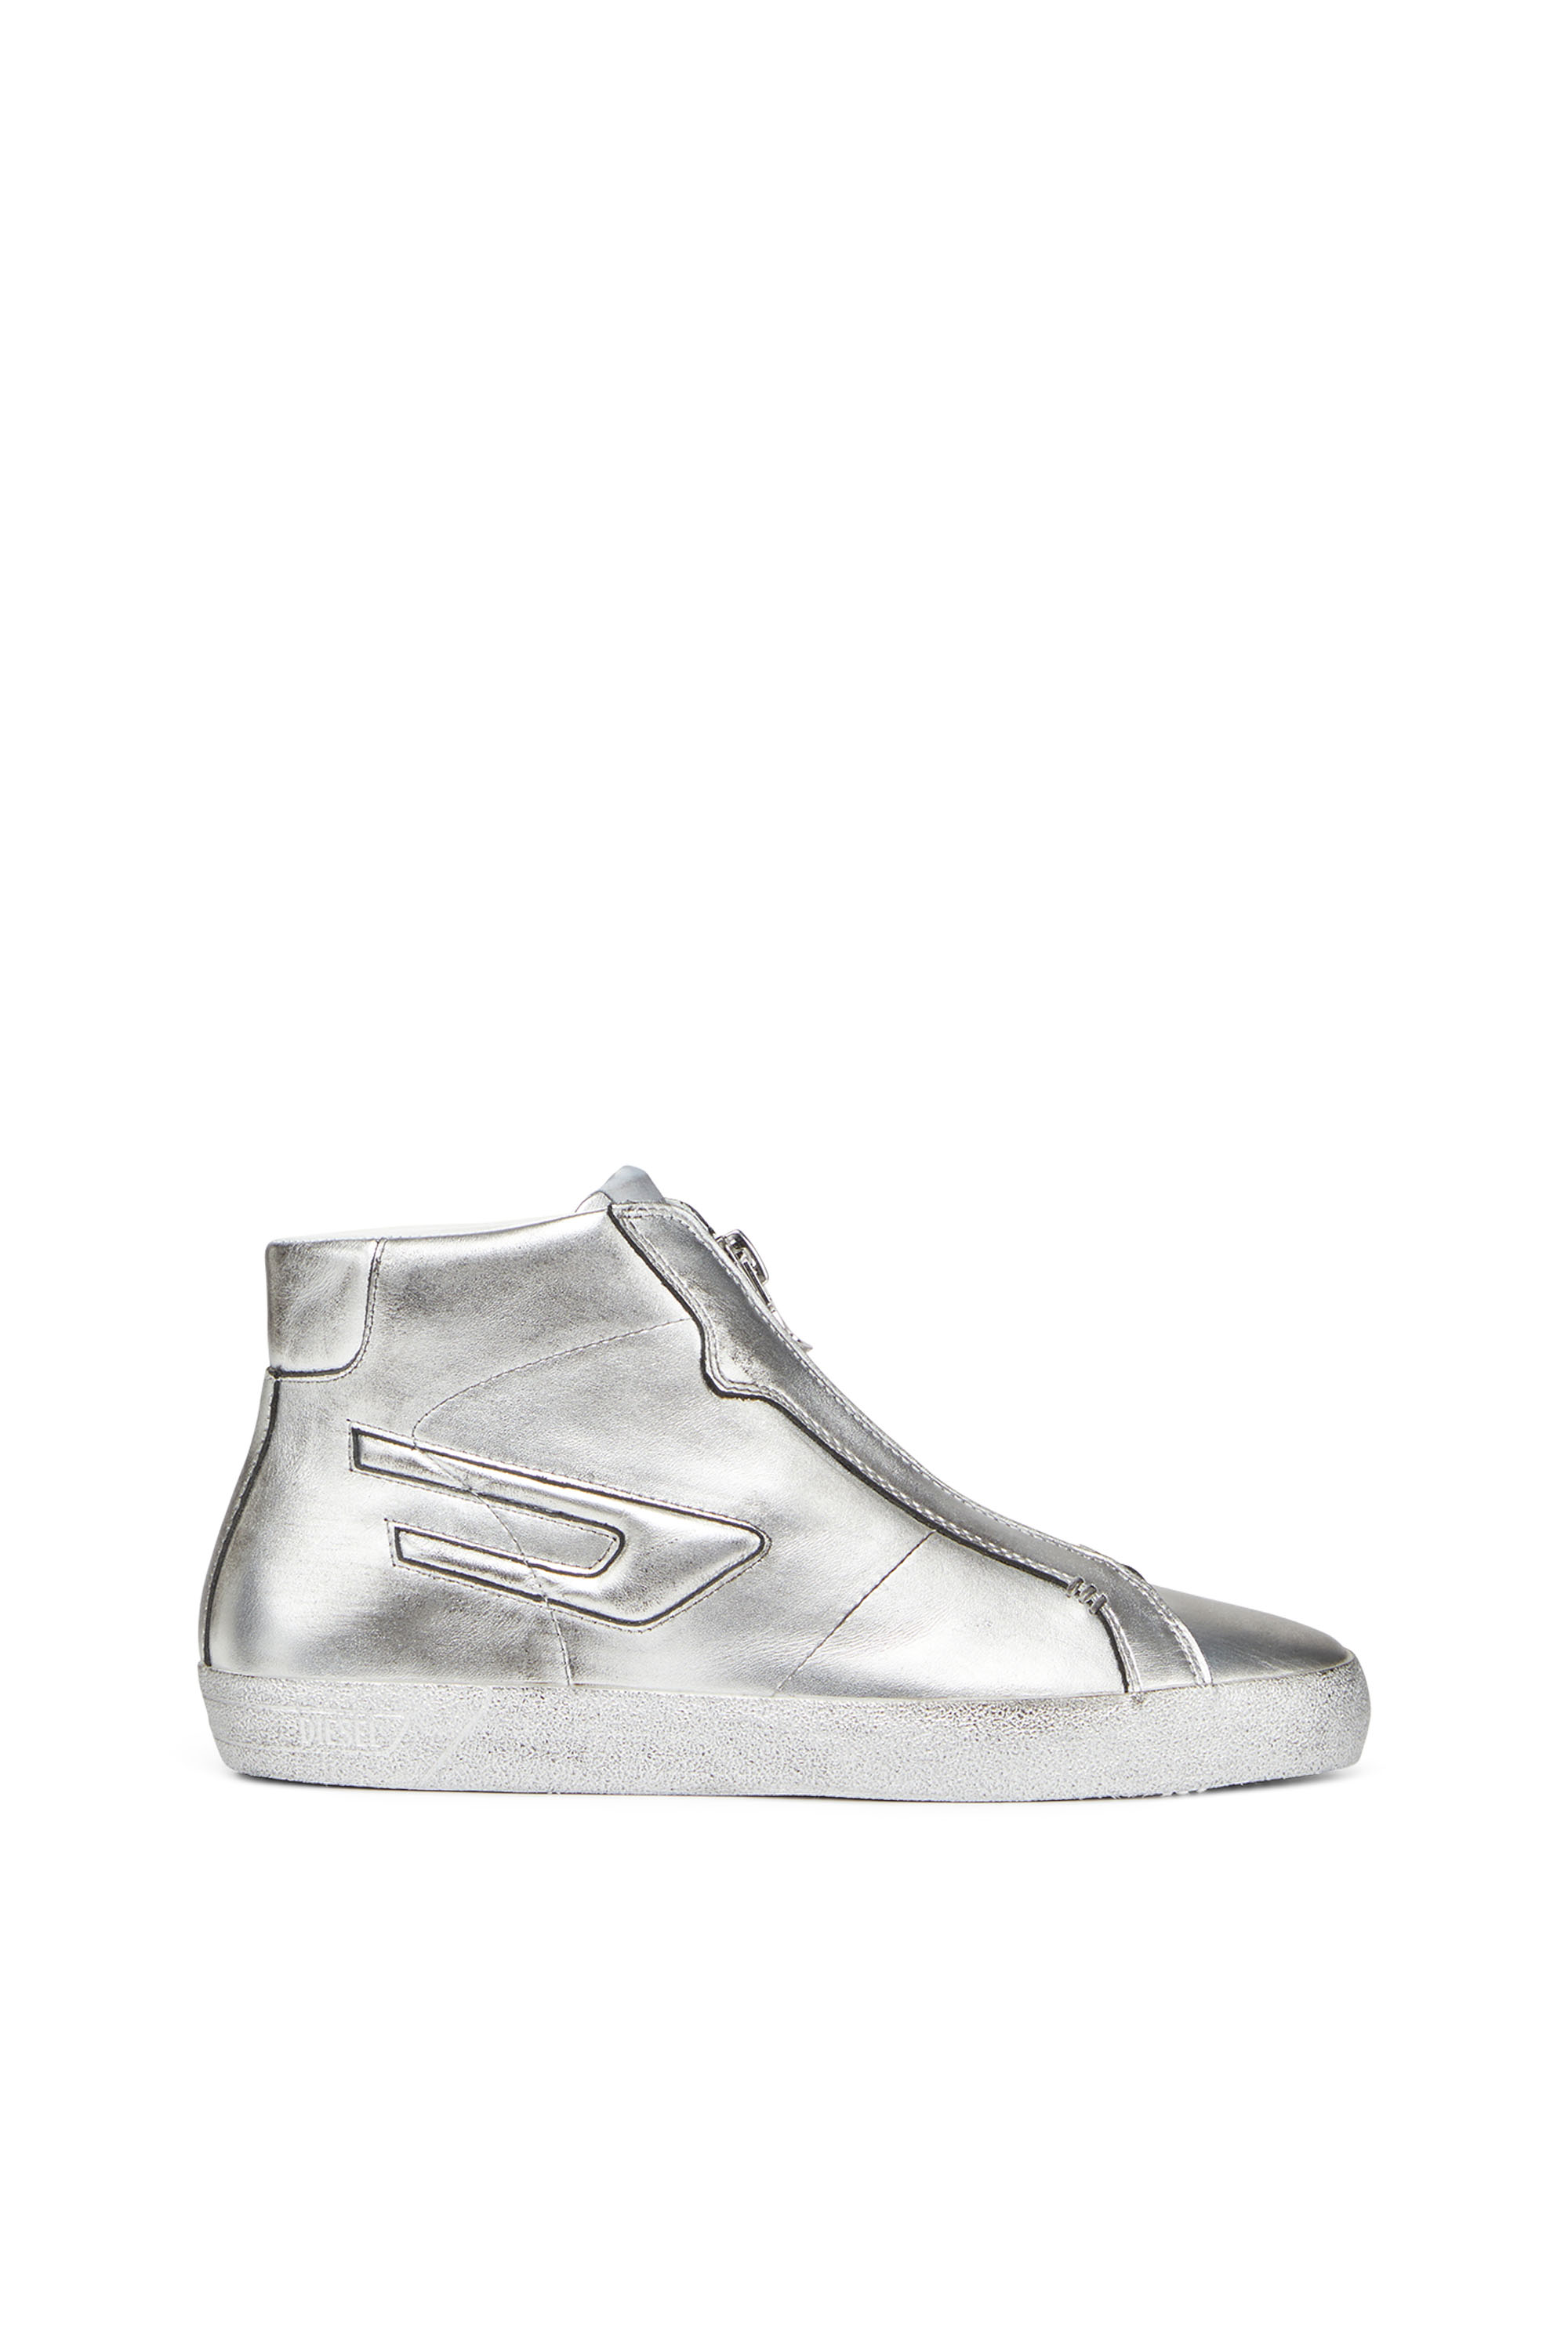 Diesel - Sneaker alte in pelle metallizzata con zip - Sneakers - Donna - Argento